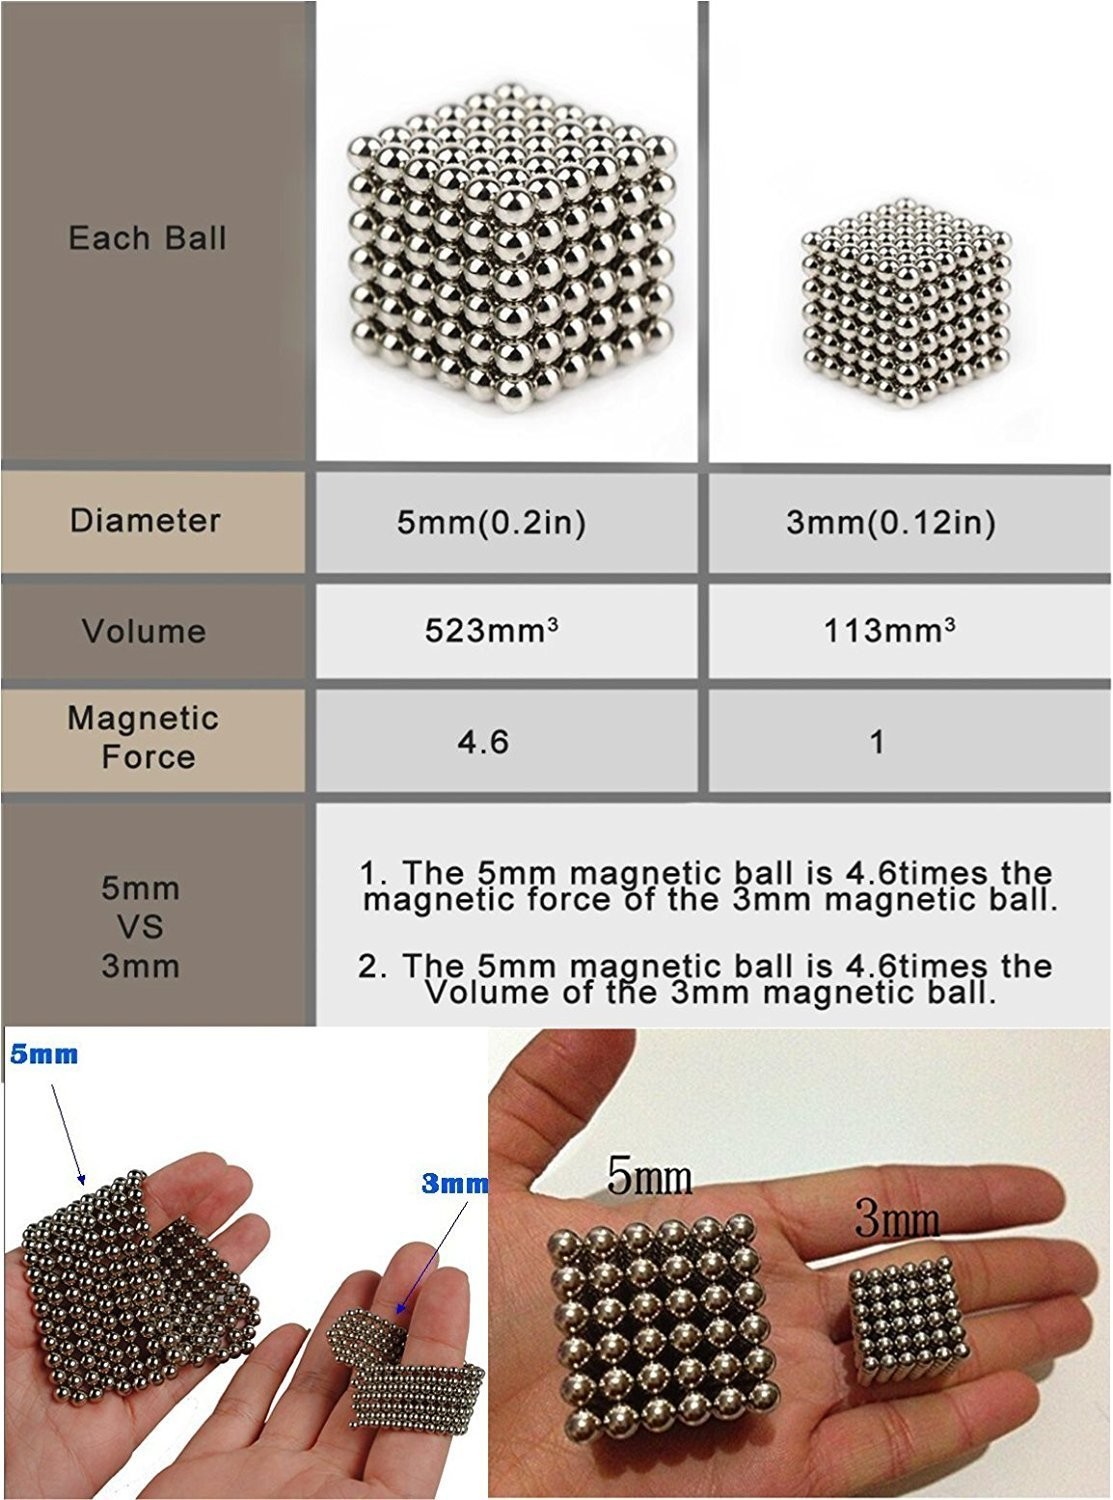 3mm magnetic balls